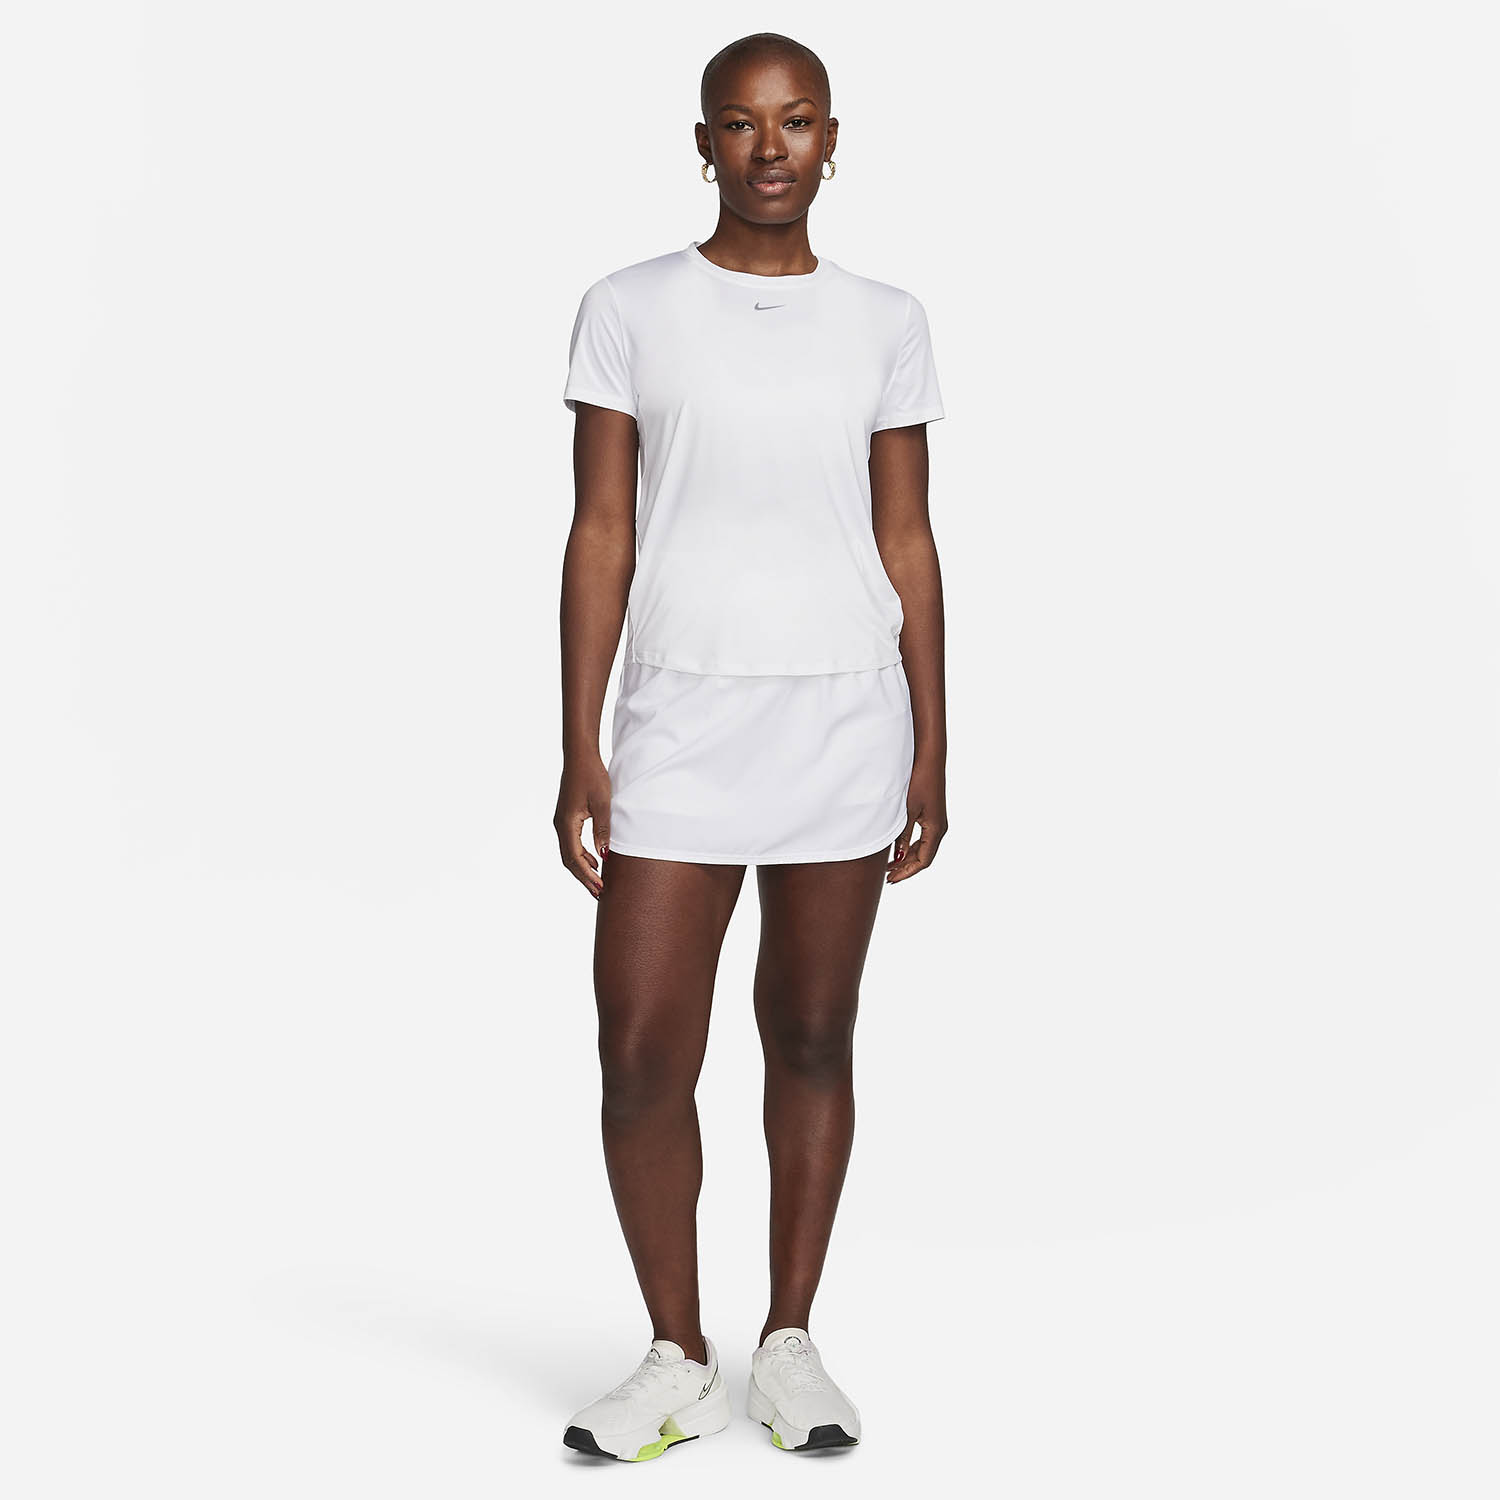 Nike One Classic T-Shirt - White/Black